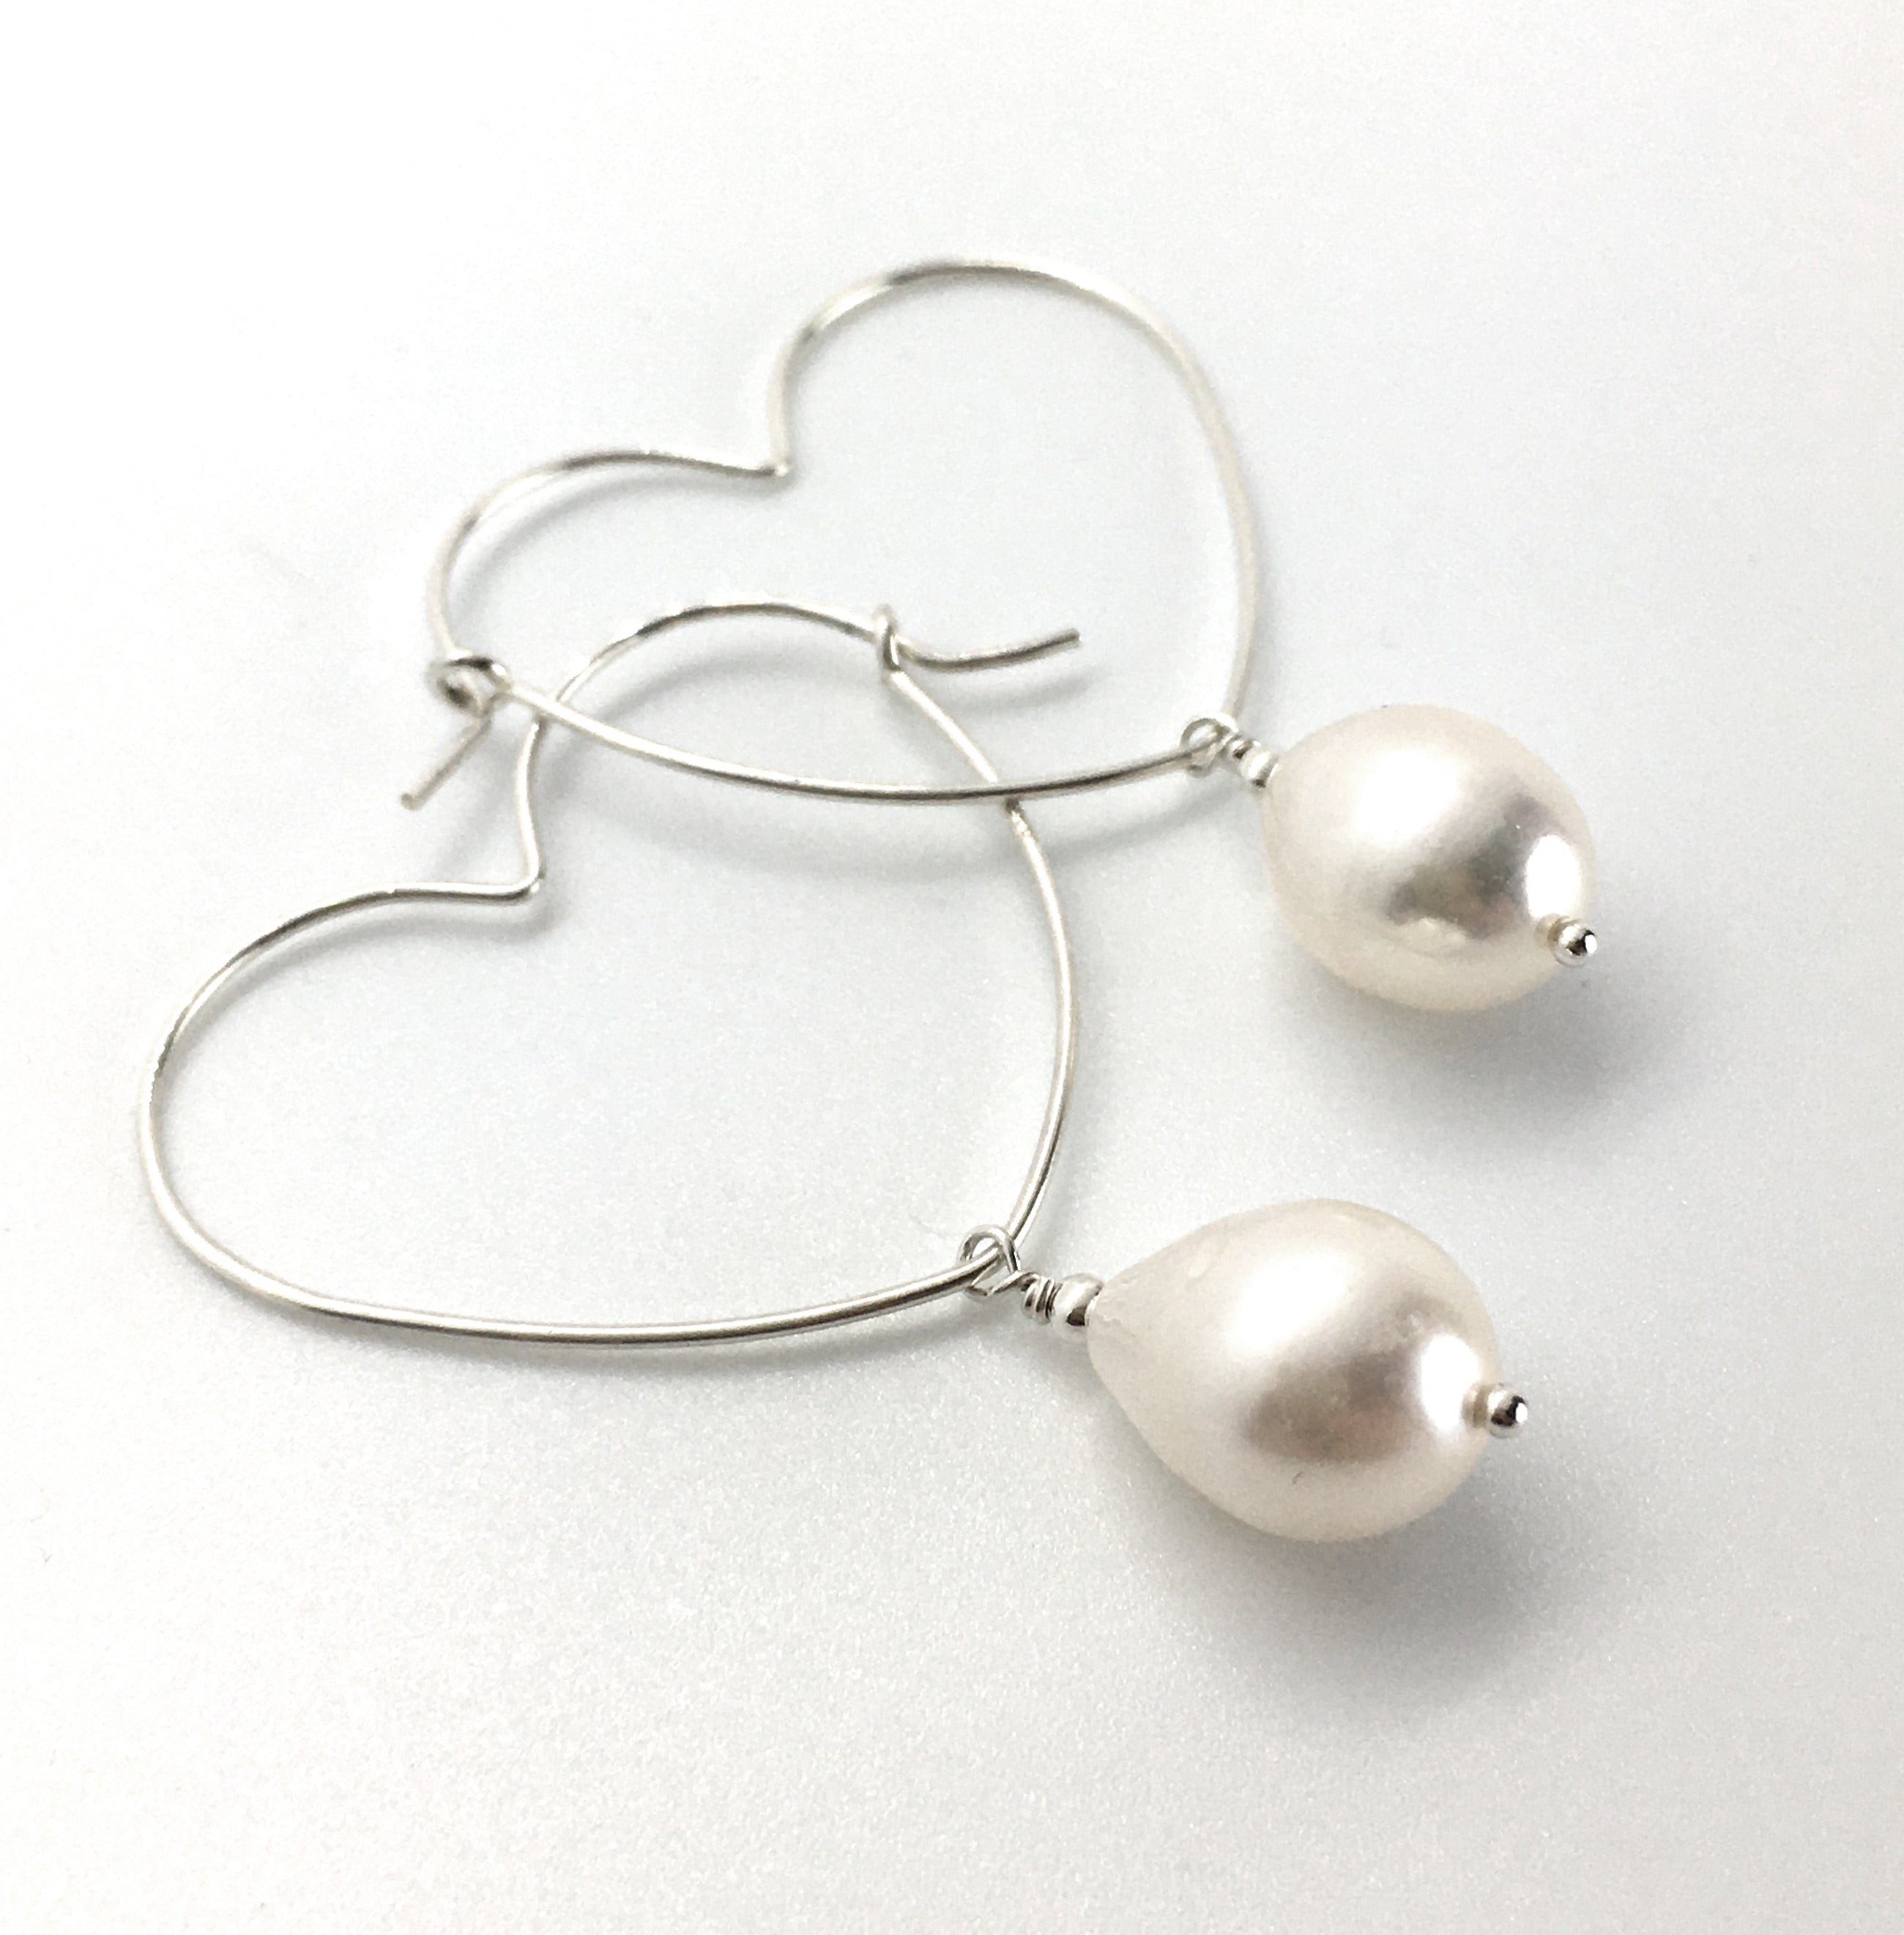 Sterling Silver Heart Hoop Earrings with Teardrop White Pearl